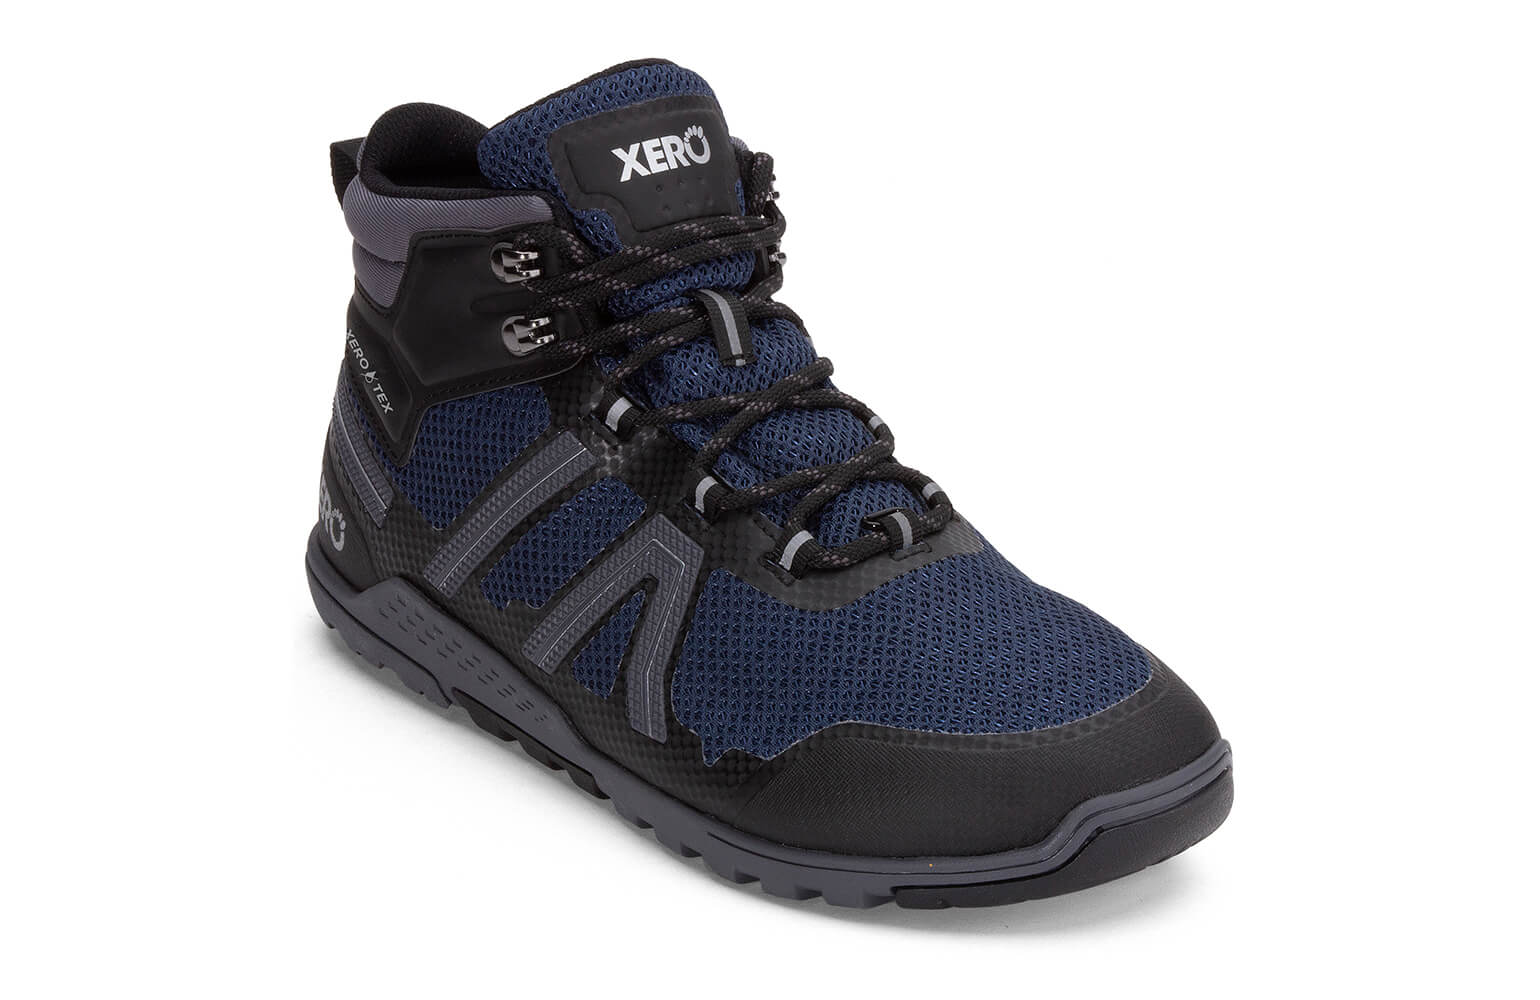 Xero Shoes Xcursion Fusion Hiking Boots - Women's